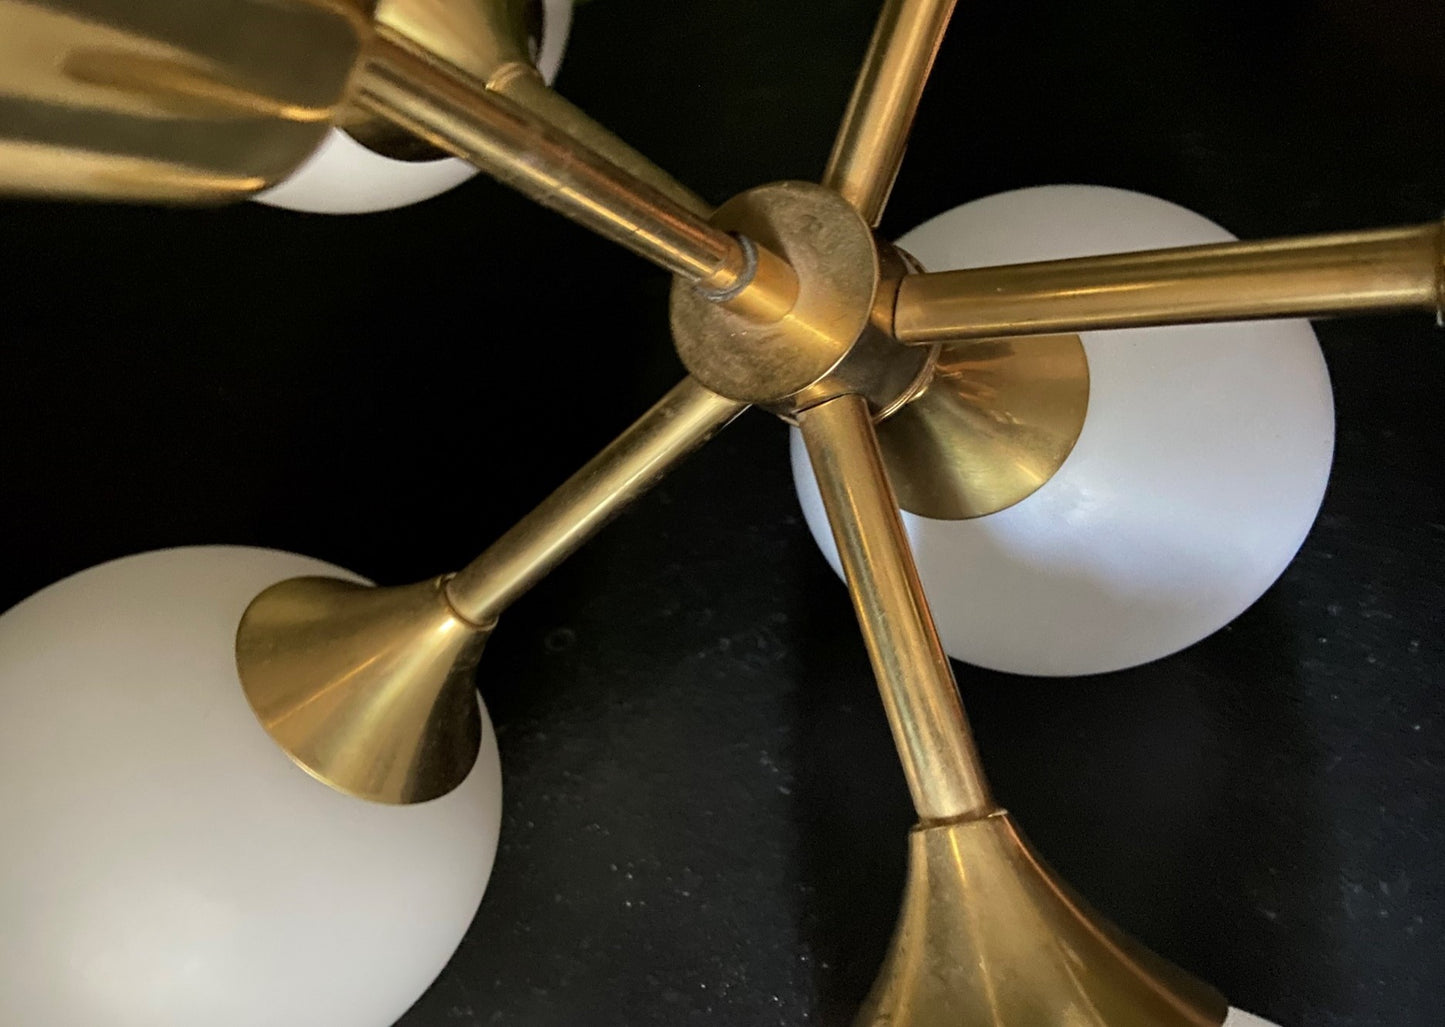 Kaiser Sputnik Globe Pendant Lamp with Opal Globes Chandelier Mid Century Modern